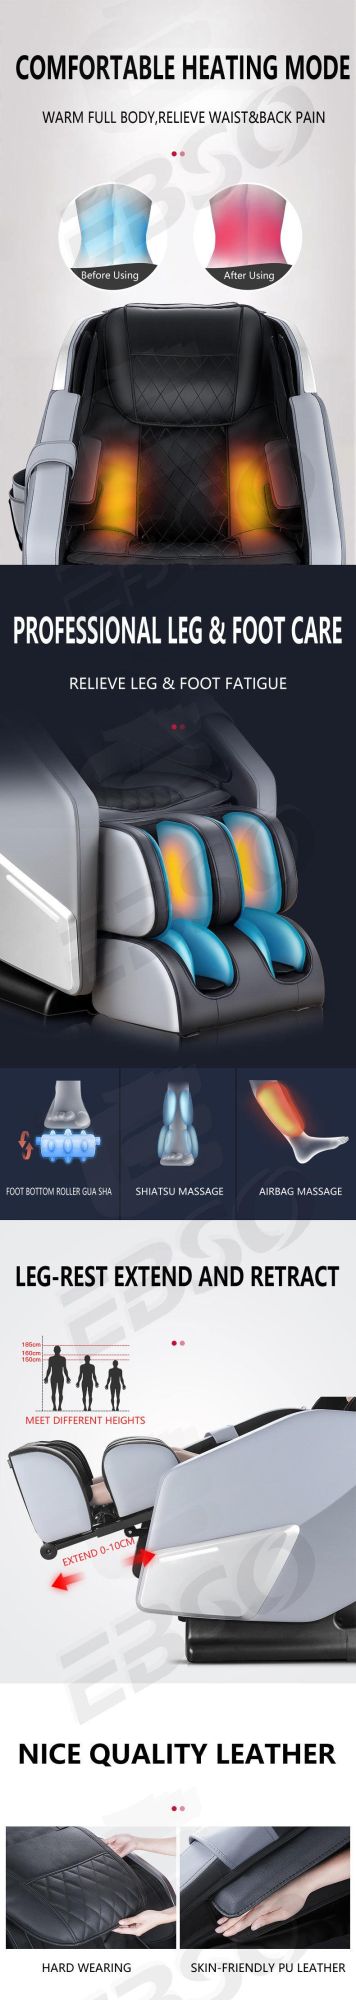 Best Cheap Vending Recliner Panaseima Electric Use Massage Chair Zero Gravity